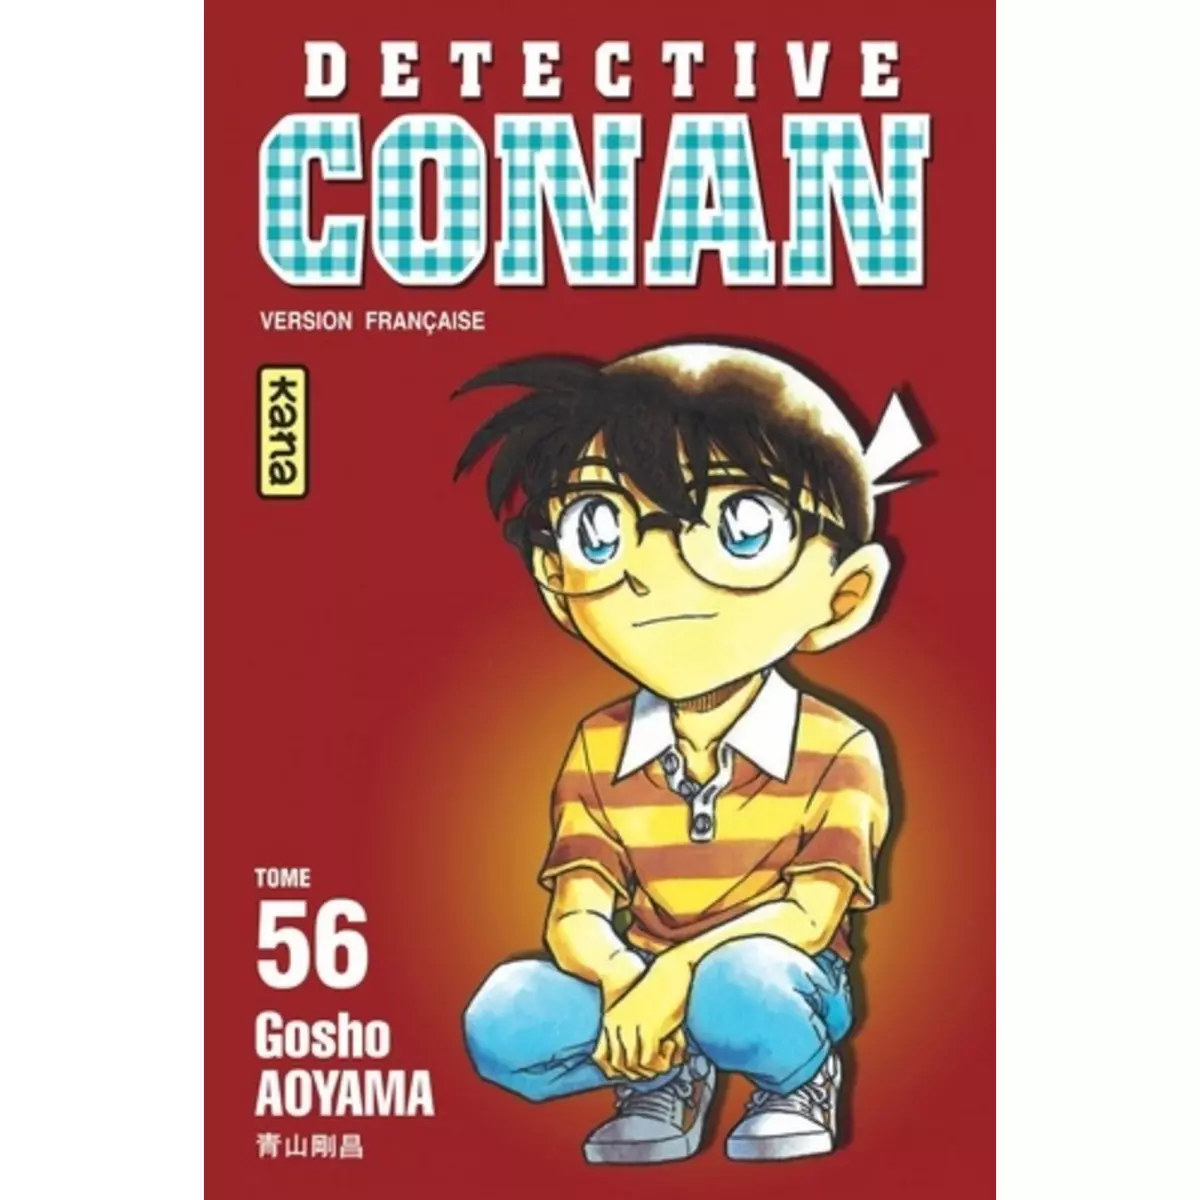  DETECTIVE CONAN TOME 56, Aoyama Gôshô